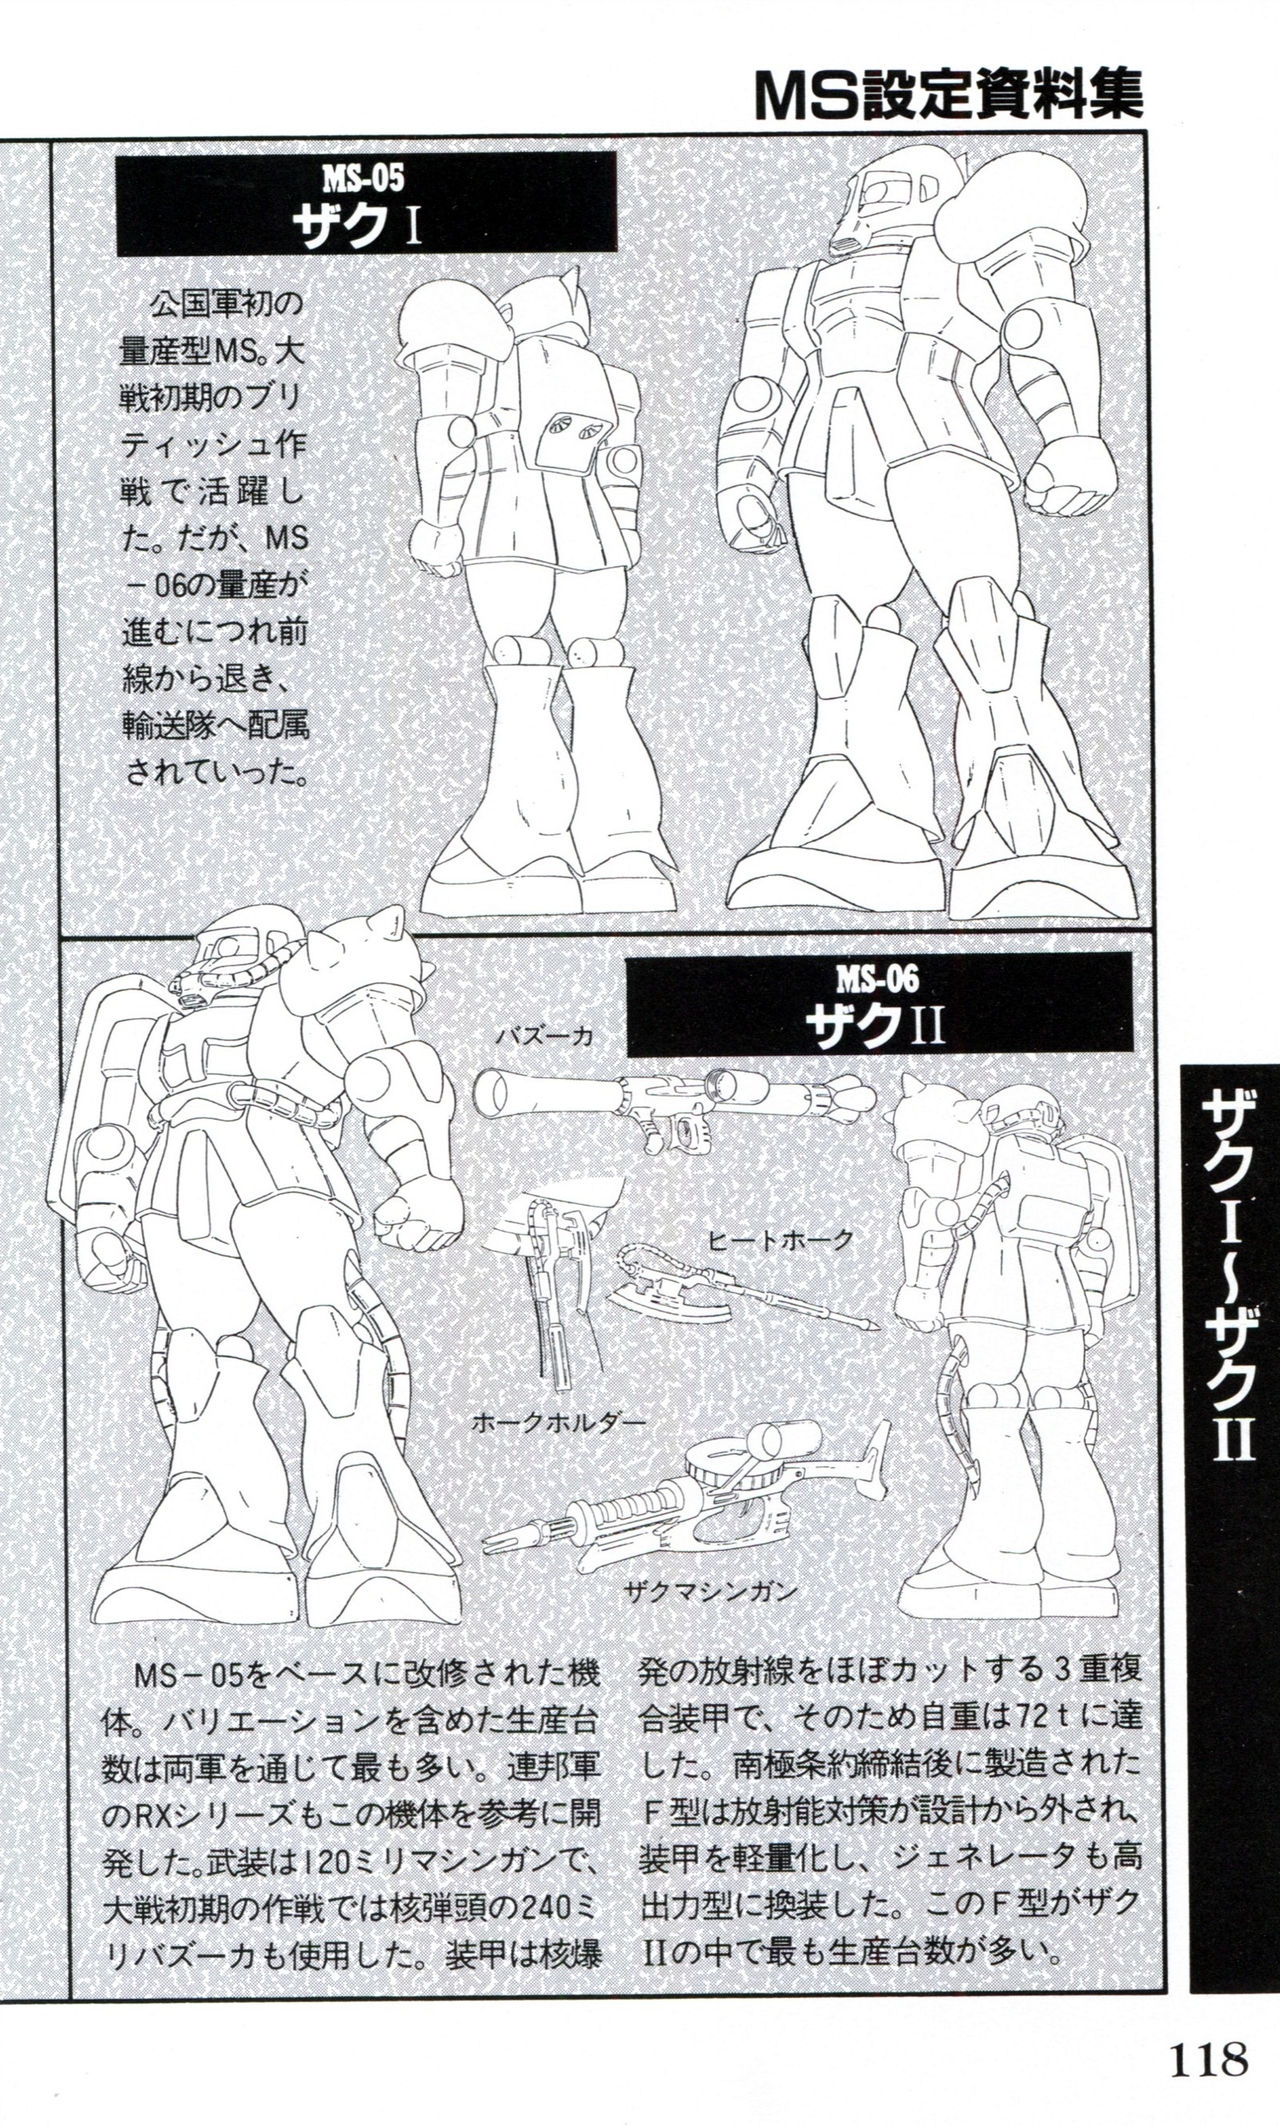 Mobile Suit Gundam U.C. Box MS Gundam Encyclopedia NO.01 - Mobile Suit Gundam 117